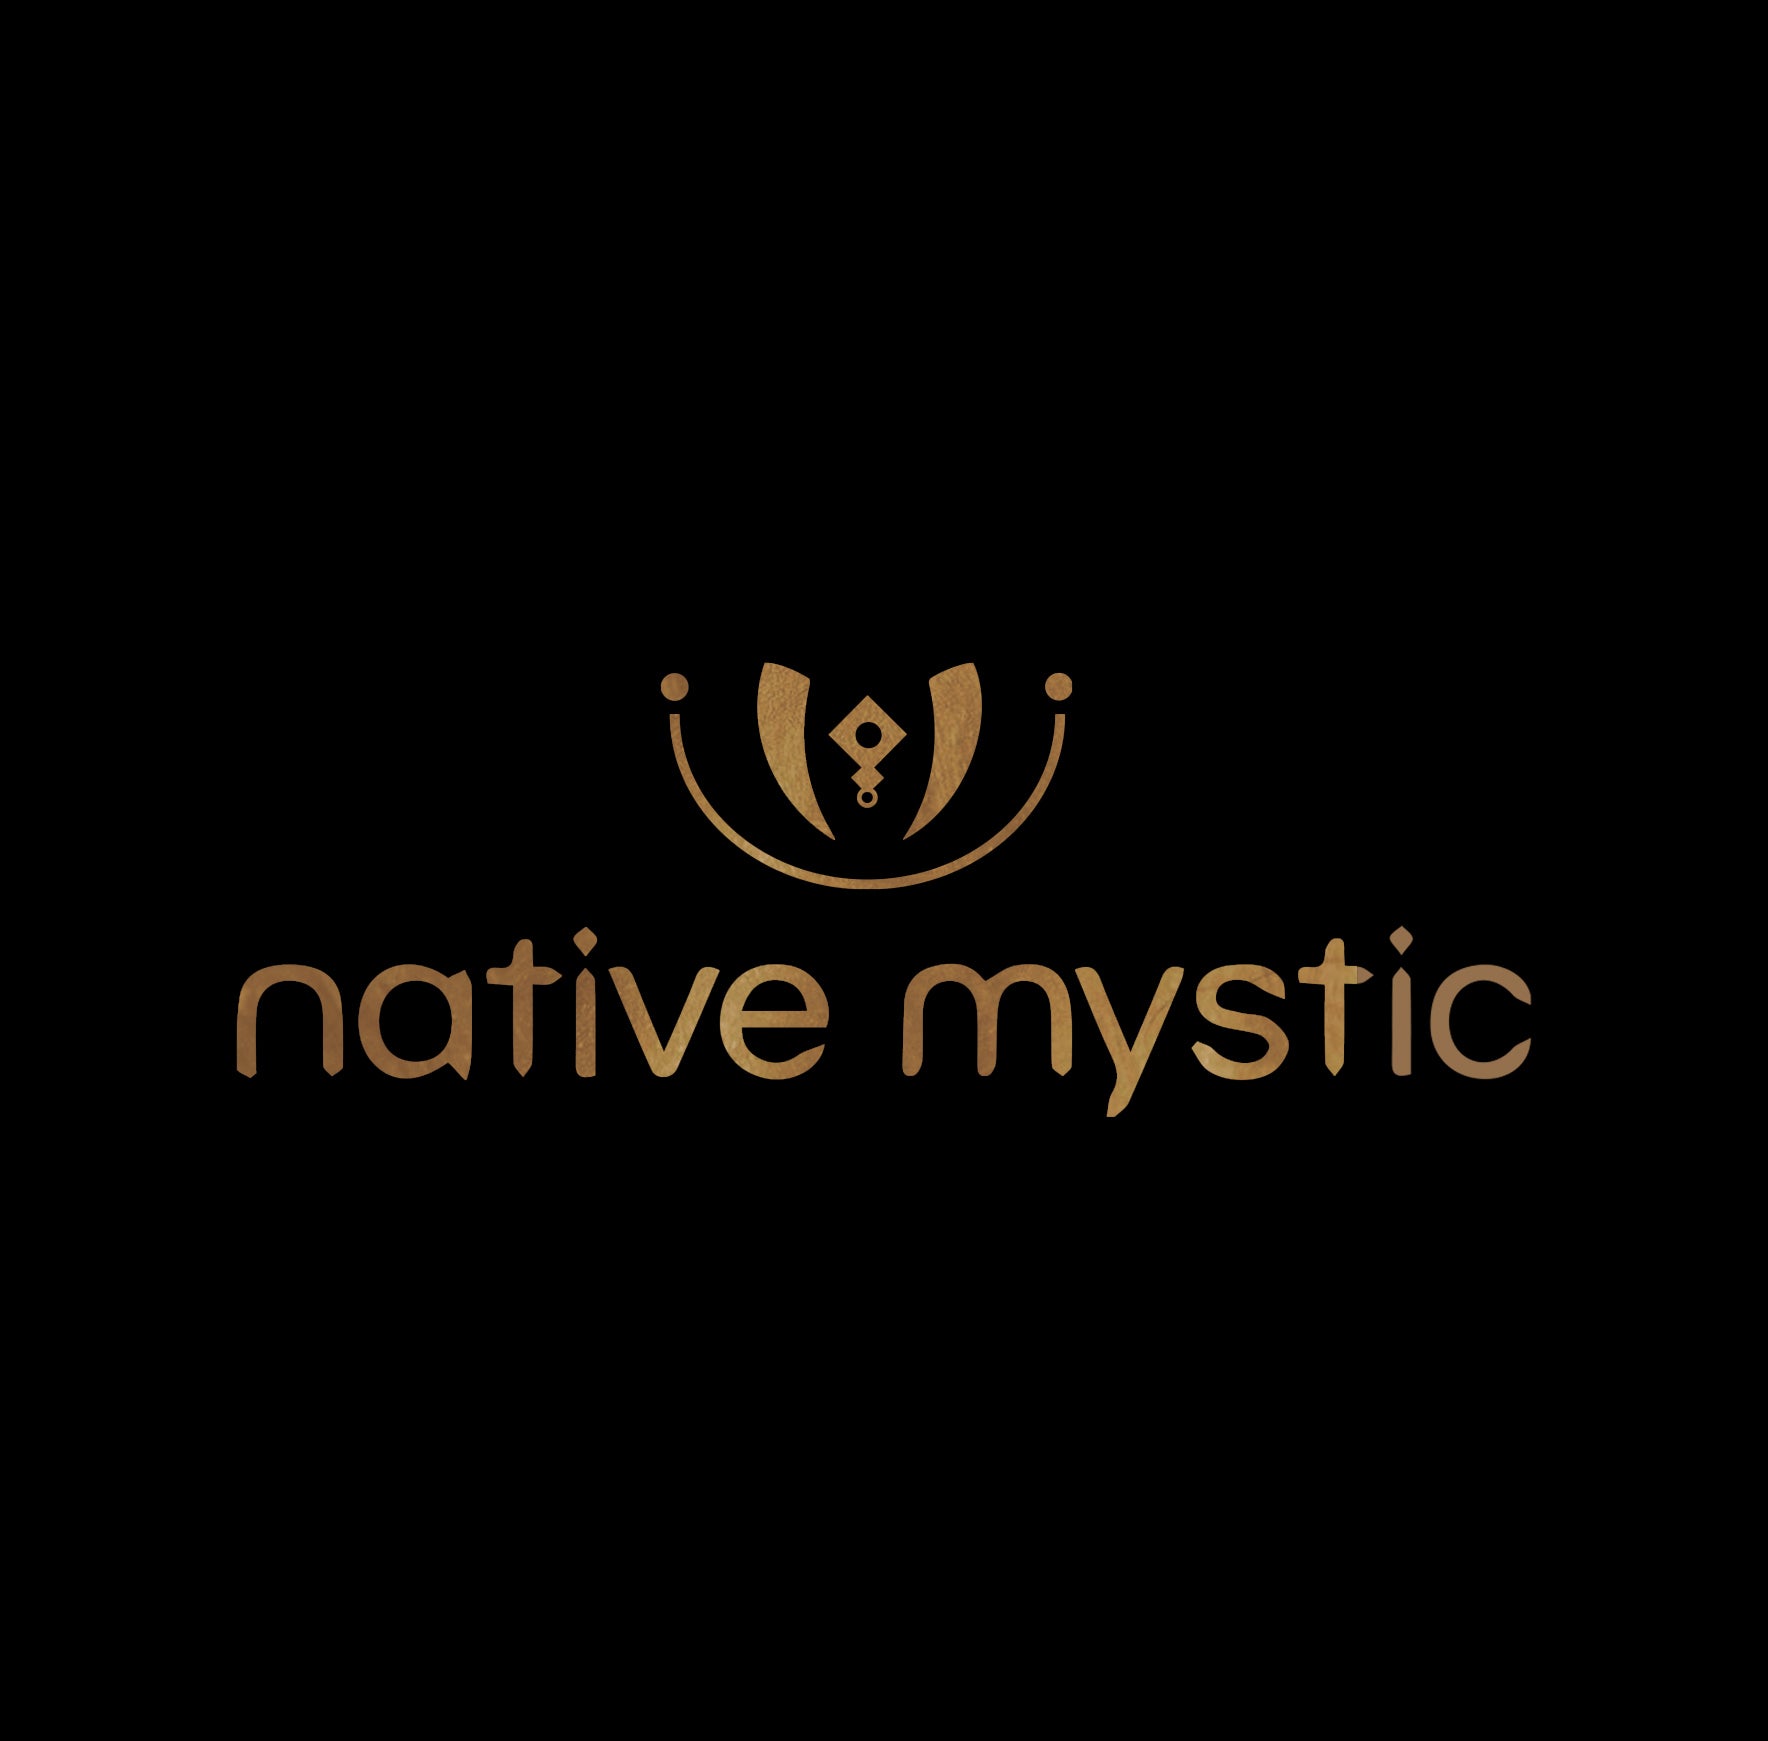 The Native Mystic